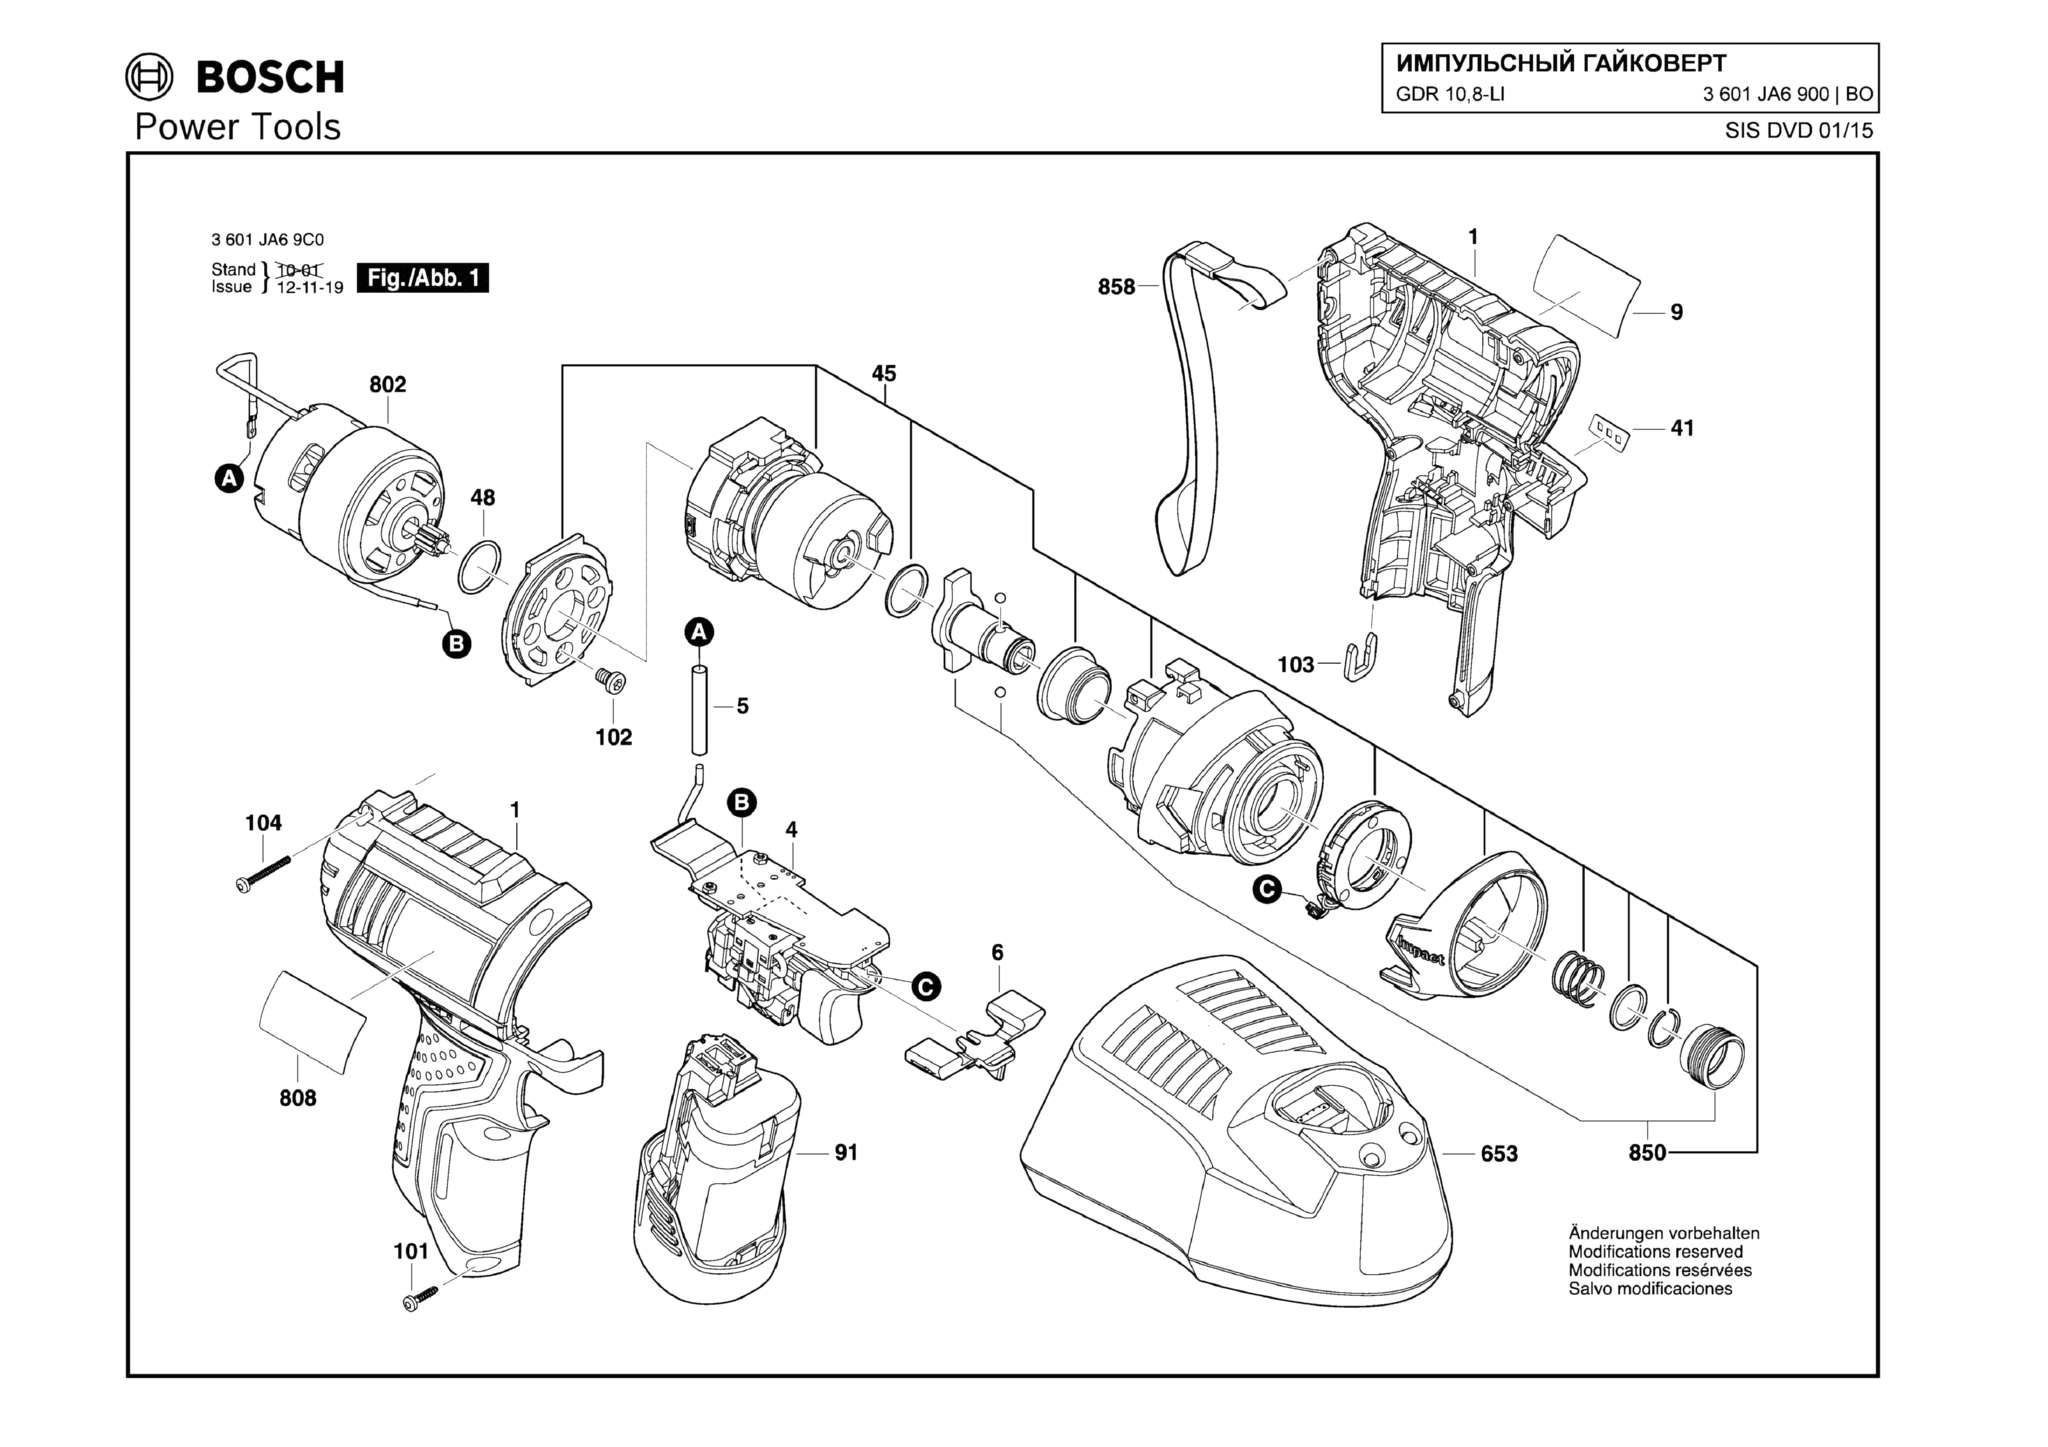 Запчасти, схема и деталировка Bosch GDR 10,8-LI (ТИП 3601JA6900)